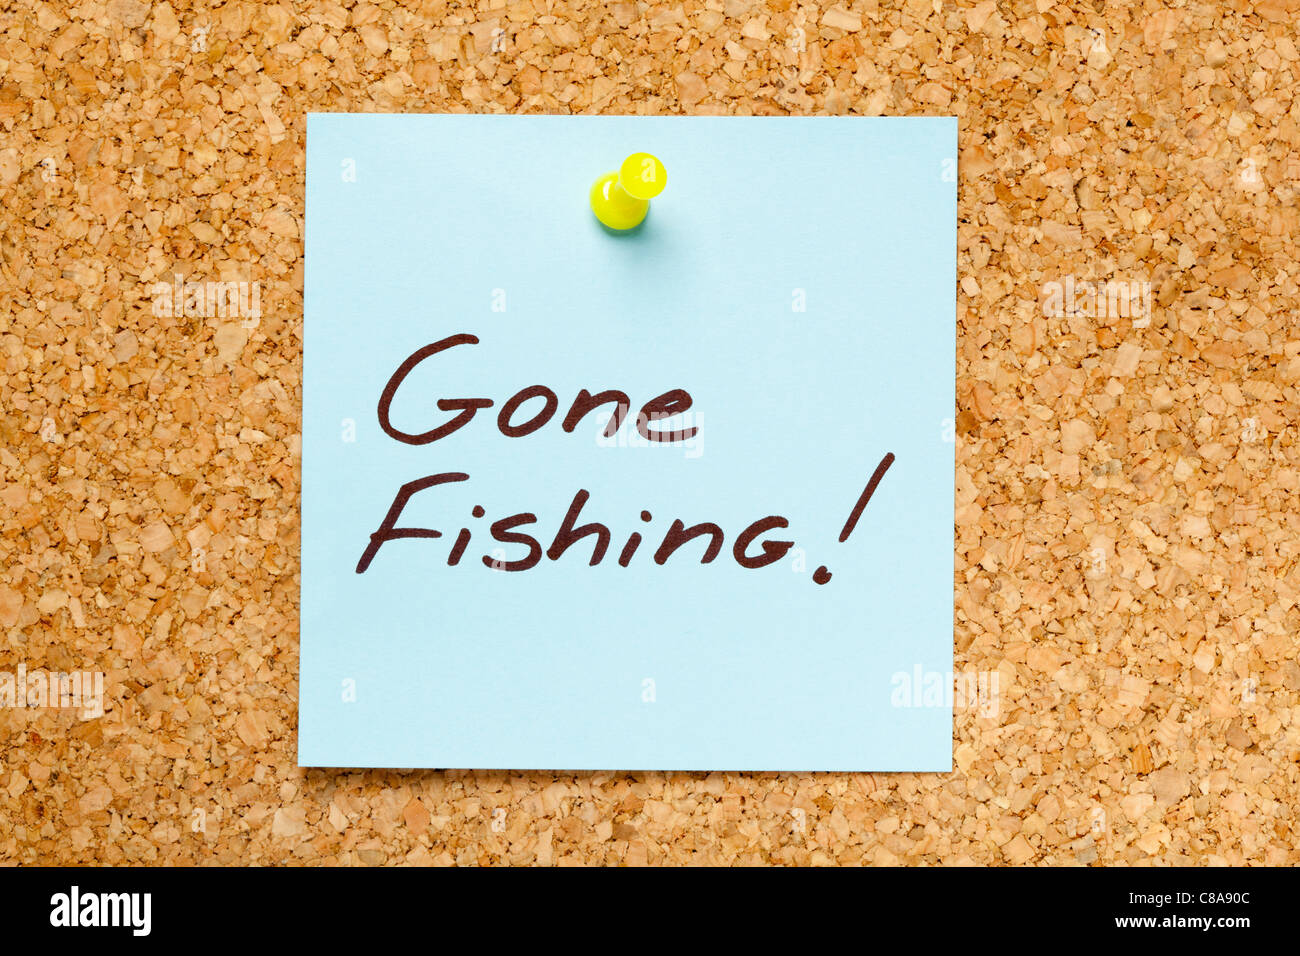 GONE FISHING! written on a blue sticky note on an office cork bulletin board. Stock Photo